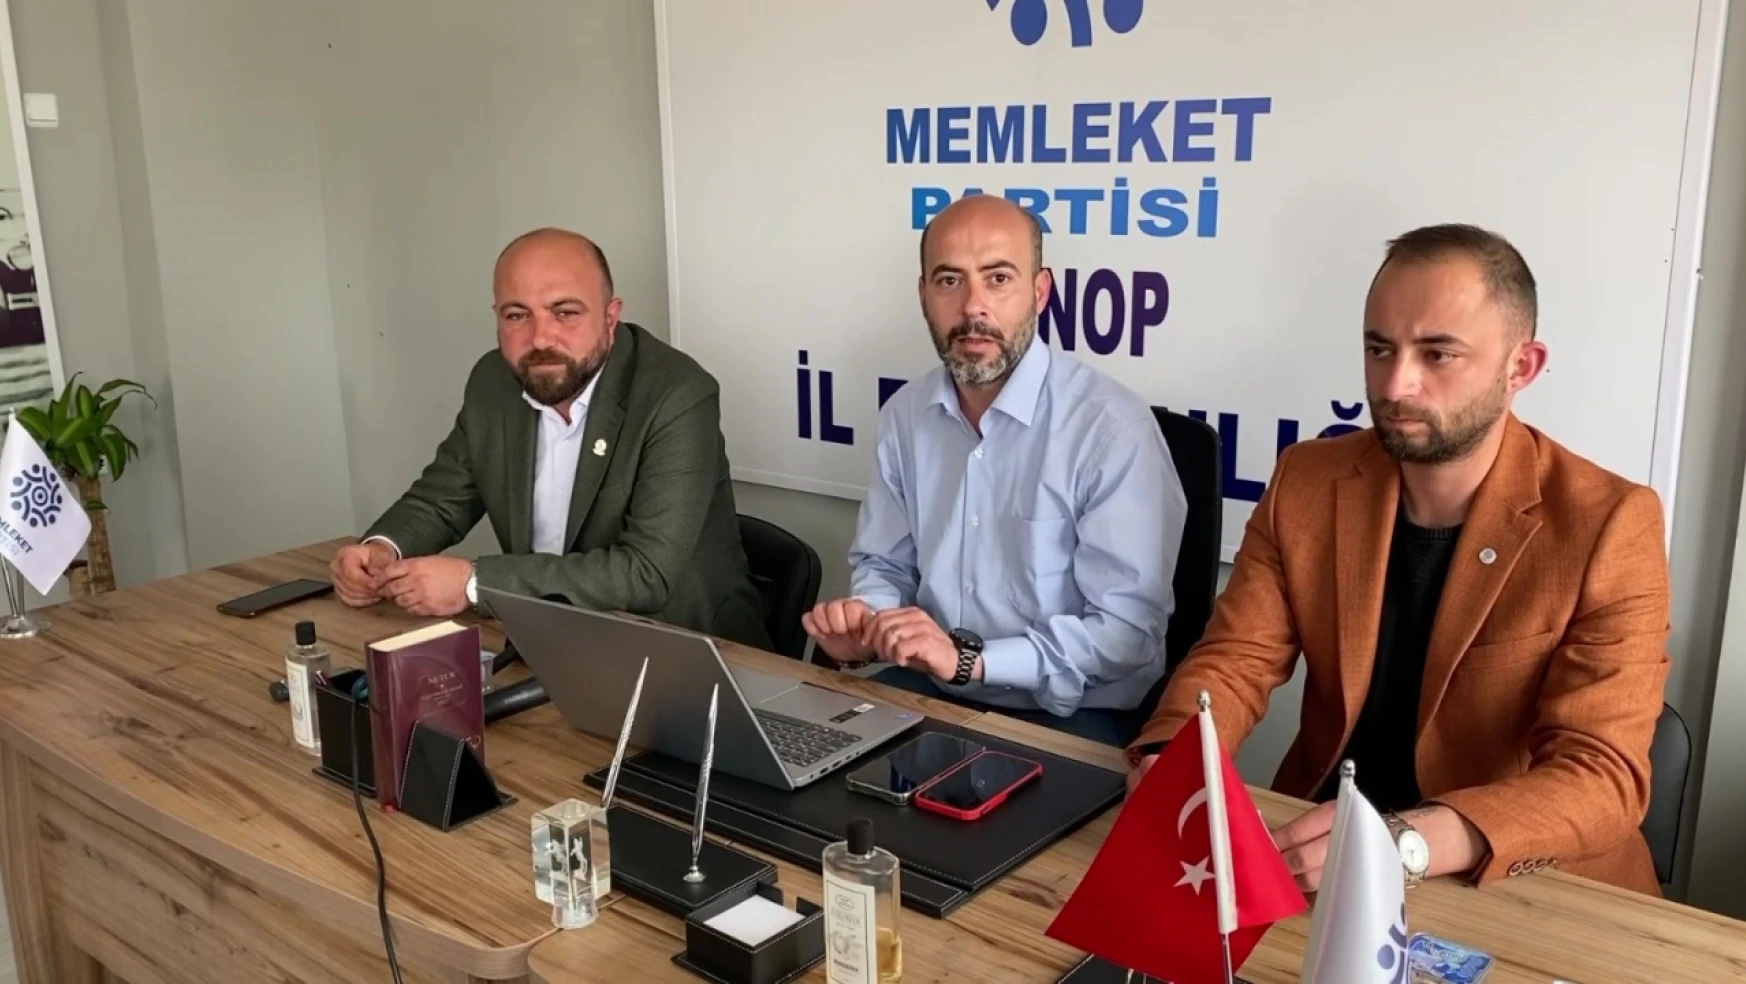 Memleket Partisi Sinop İl Teşkilatı'ndan toplu istifa